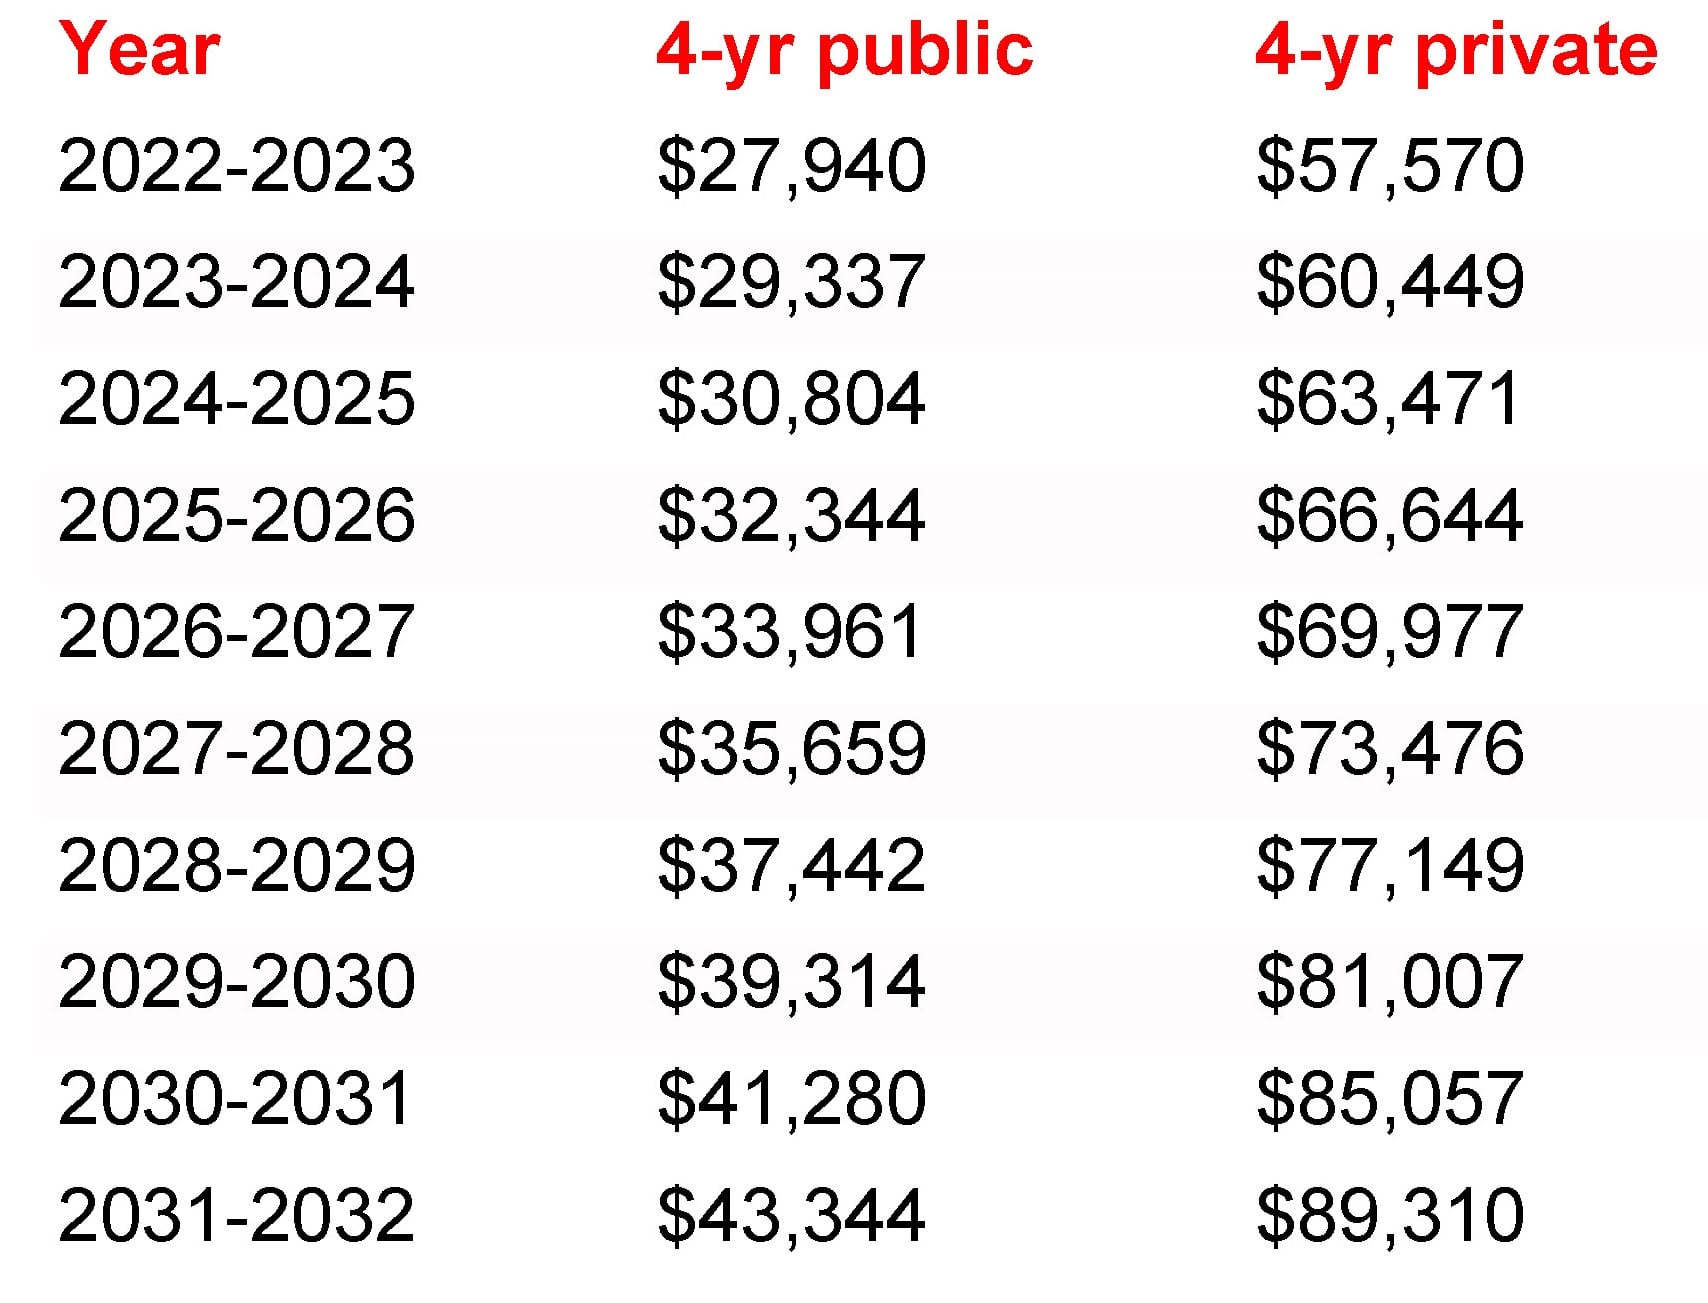 Chart reads : Year 2022-2023 4-yr public $27,940 4-yr private $57,570 Year 2023-2024 4-yr public $29,337 4-yr private $60,449 Year 2024-2025 4-yr public $30,804 4-yr private $63,471 Year 2025-2026 4-yr public $32,344 4-yr private $66,644 Year 2026-2027 4-yr public $33,961 4-yr private $69,977 Year 2027-2028 4-yr public $35,659 4-yr private $73,476 Year 2028-2029 4-yr public $37,442 4-yr private $77,149 Year 2029-2030 4-yr public $39,314 4-yr private $81,007 Year 2030-2031 4-yr public $41,280 4-yr private $85,057 Year 2031-2032 4-yr public $43,344 4-yr private $89,310 Article title: Understanding Saving for College